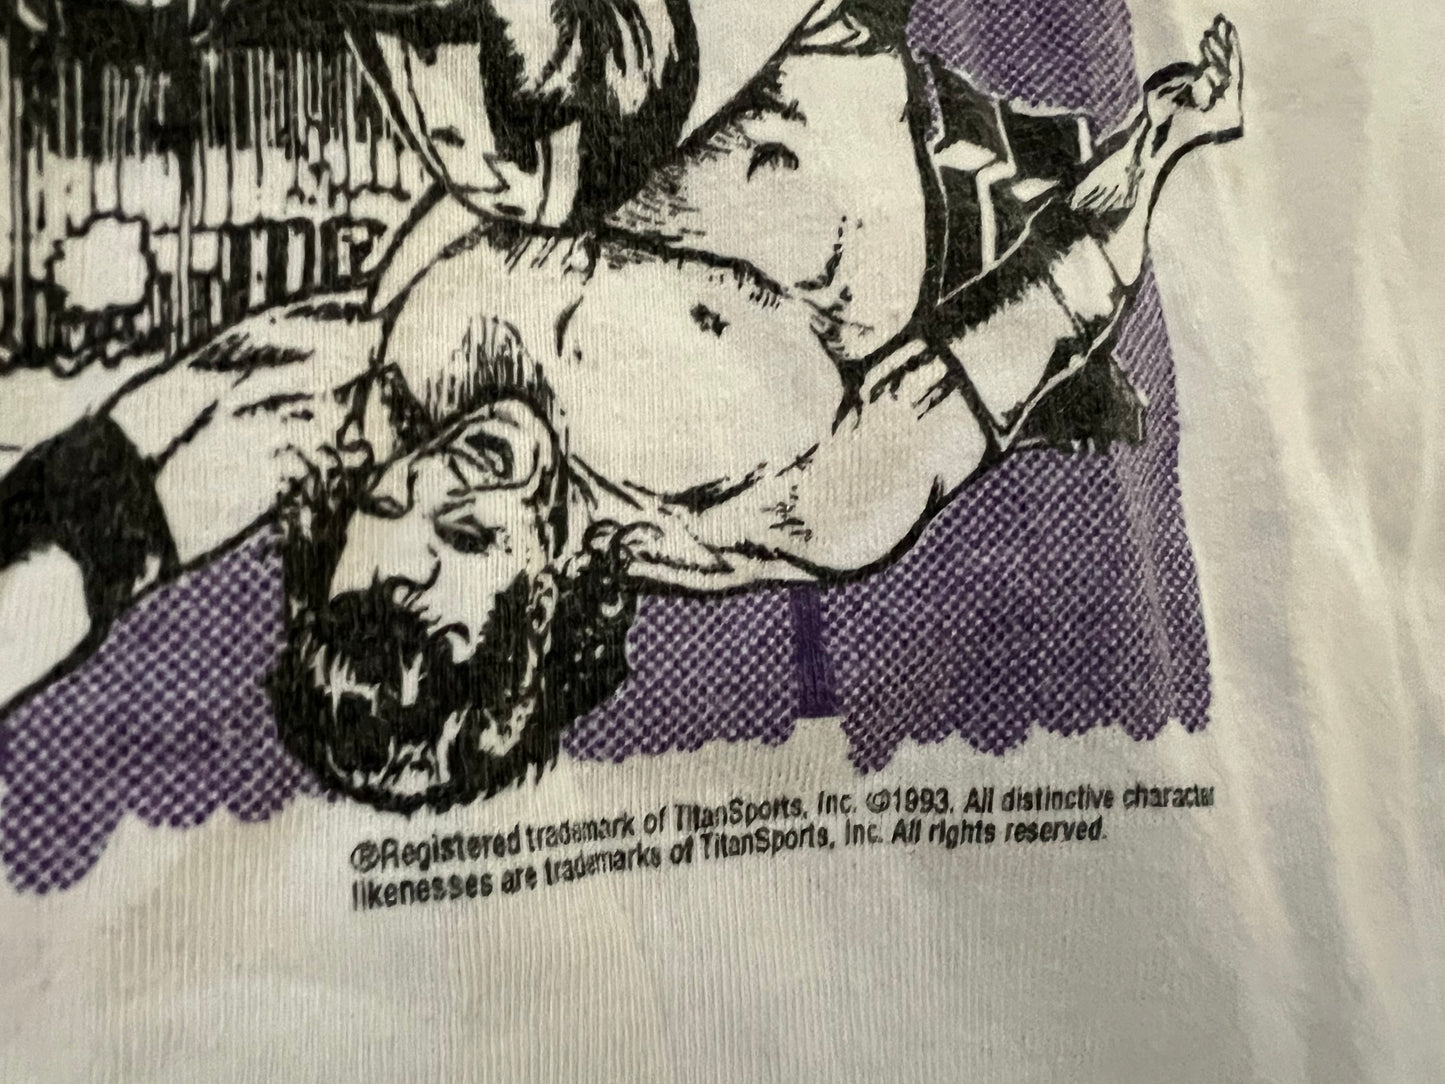 1994 WWF Royal Rumble shirt featuring Razor Ramon, Yokozuna, Lex Luger, Bret Hart and The Undertaker